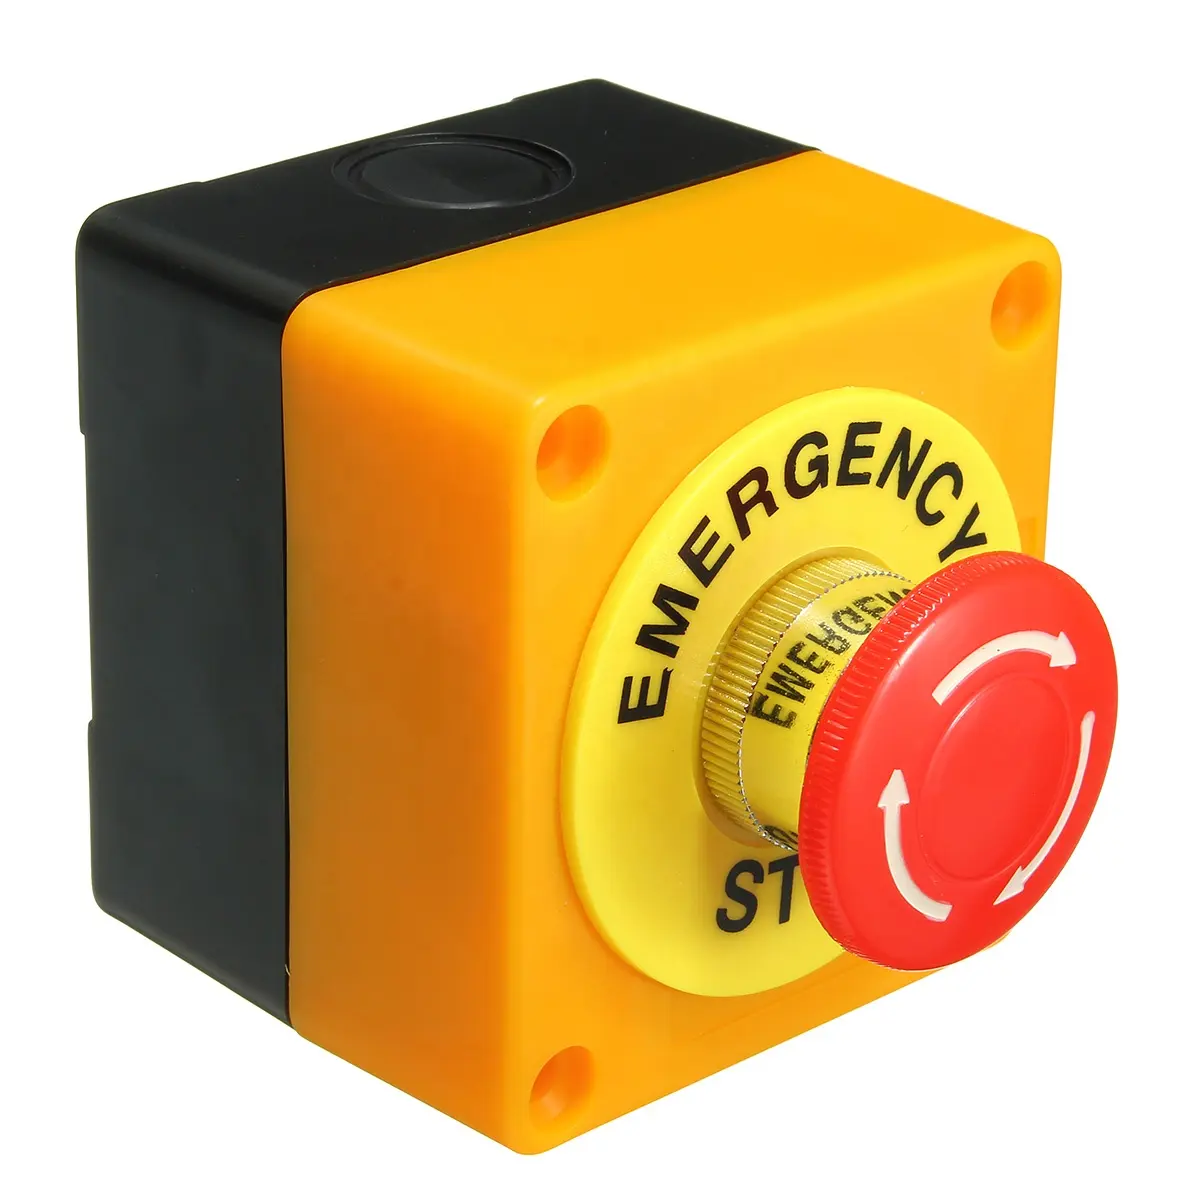 22mm acil durdurma basmalı düğme anahtarı kutusu ile 1 NO 1 NC 10A 660V su geçirmez kutu el düğmesi patlama dayanıklı Anti-corrosi